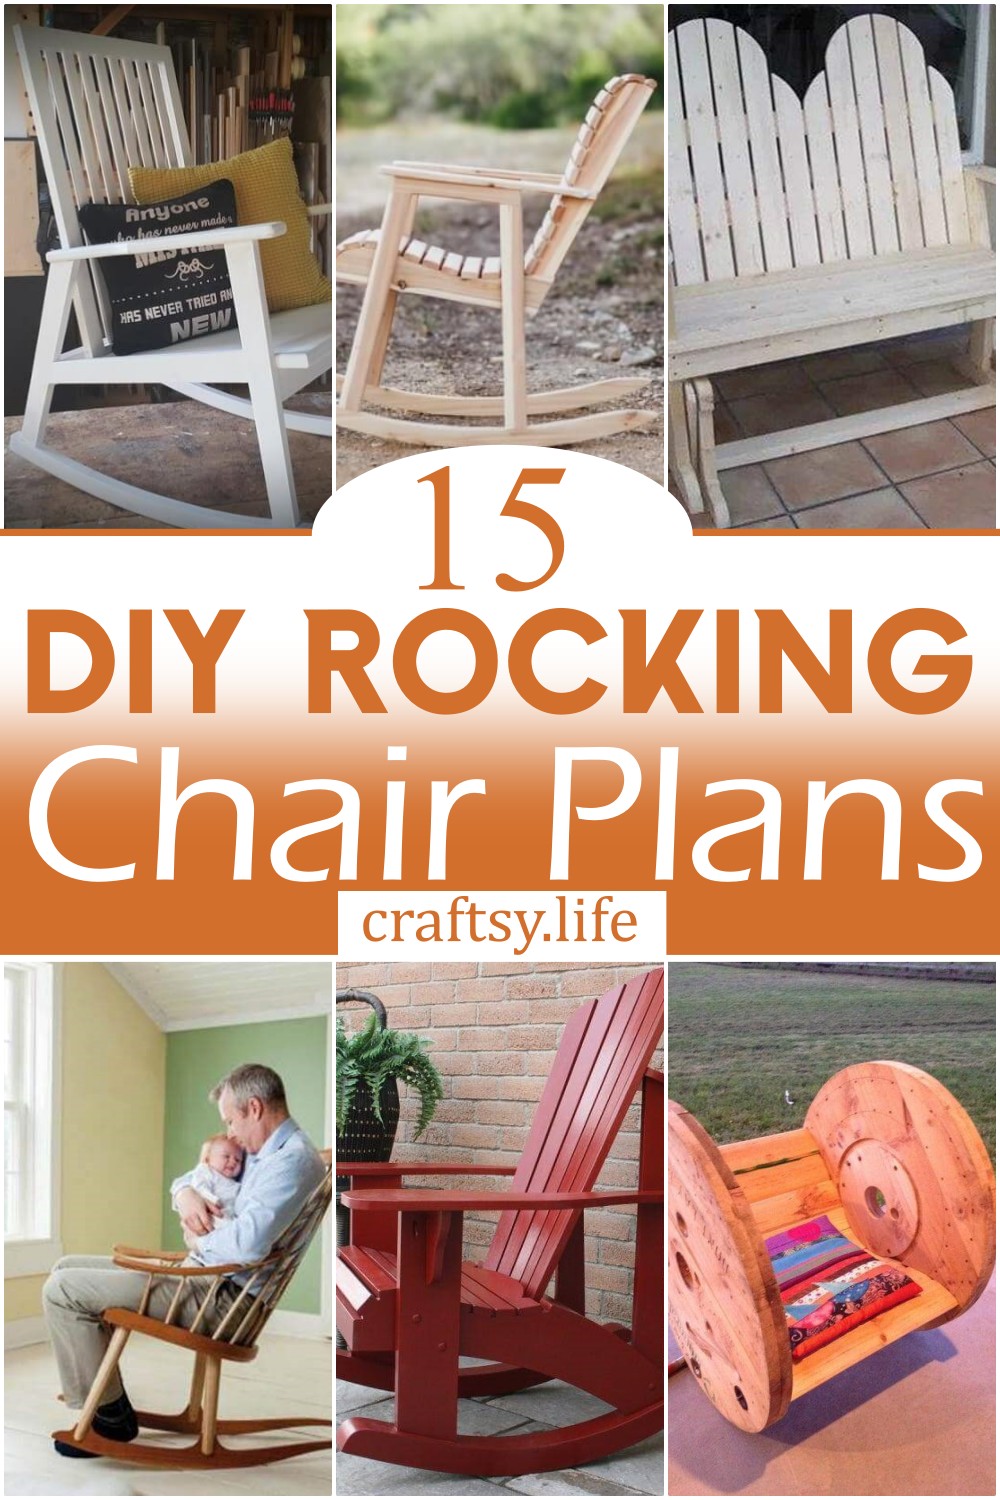 DIY Rocking Chair Plans 1